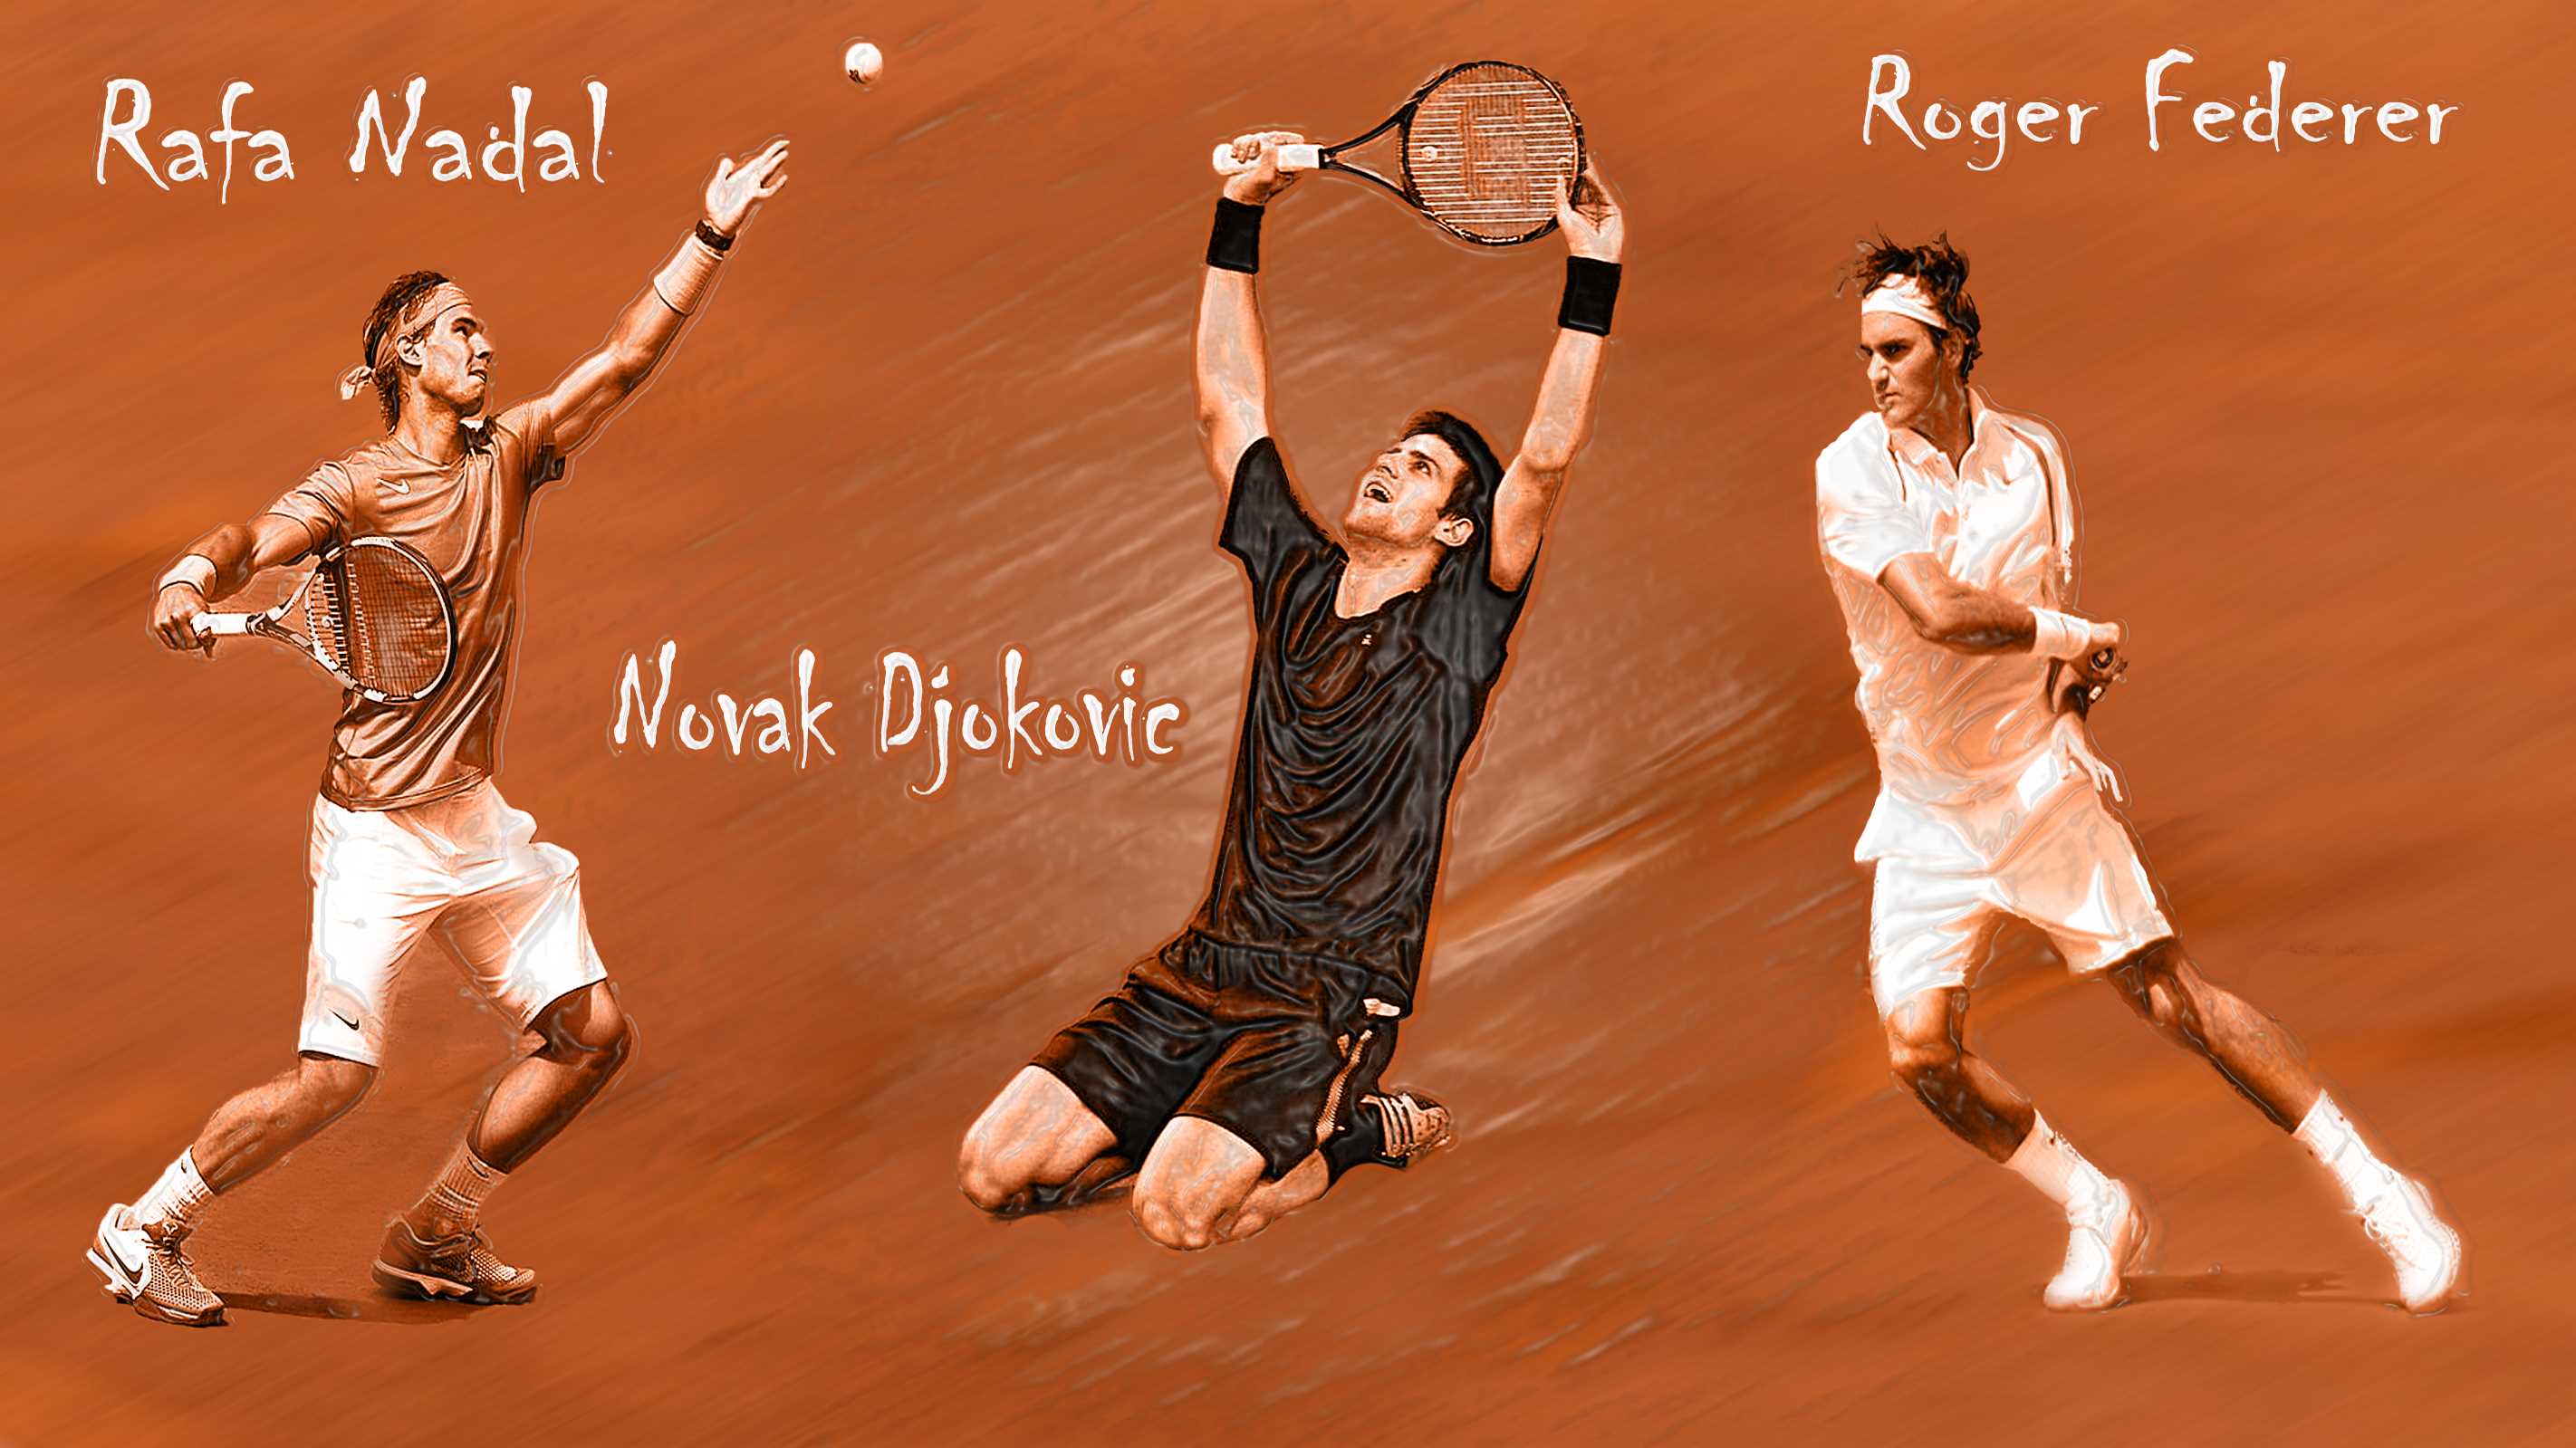 Federer, Nadal, Djokovic best tennis player? netivist